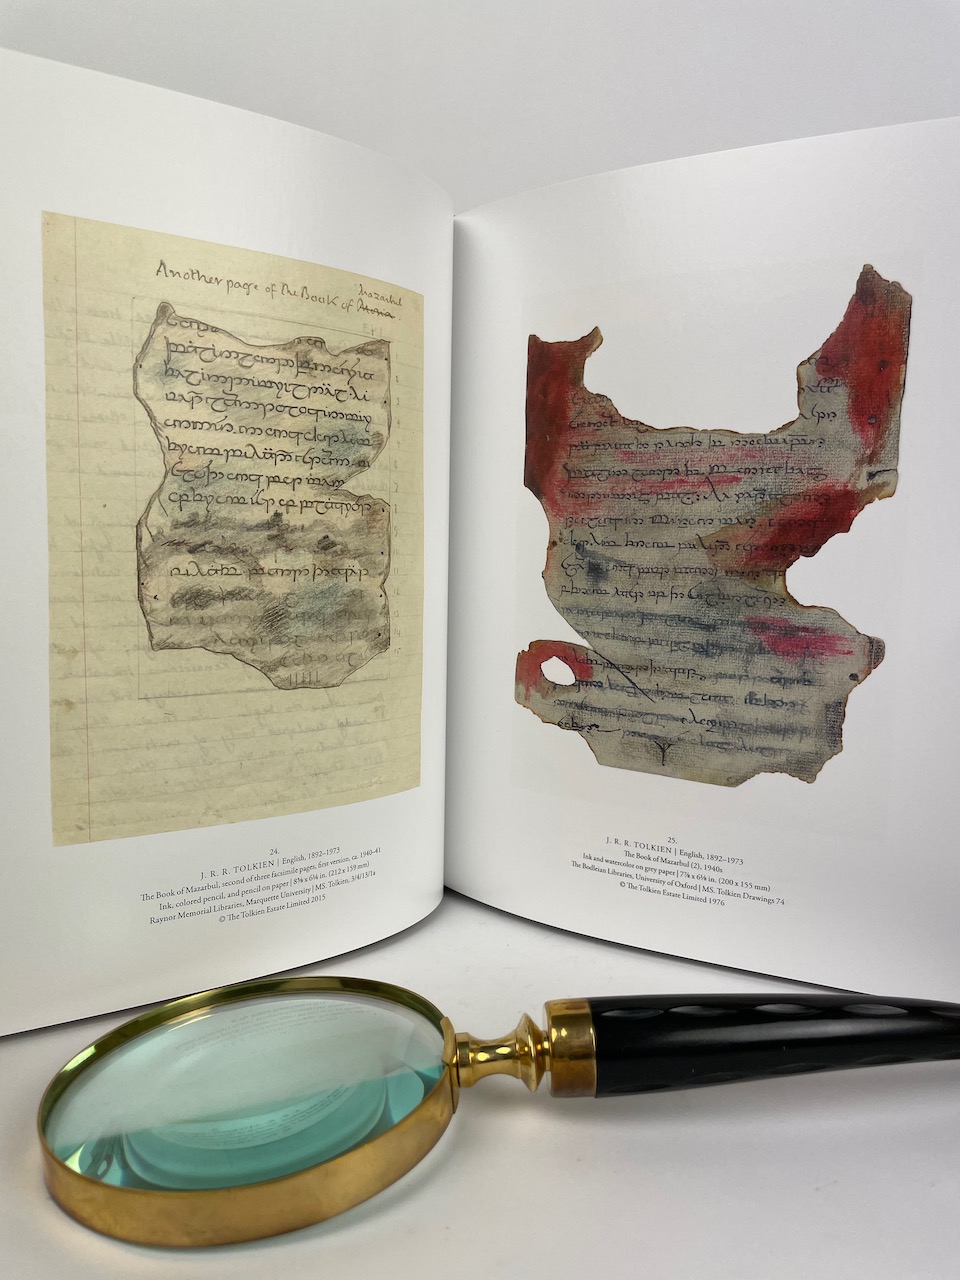 
J.R.R. Tolkien: The Art of the Manuscript - exhibition catalogue 6